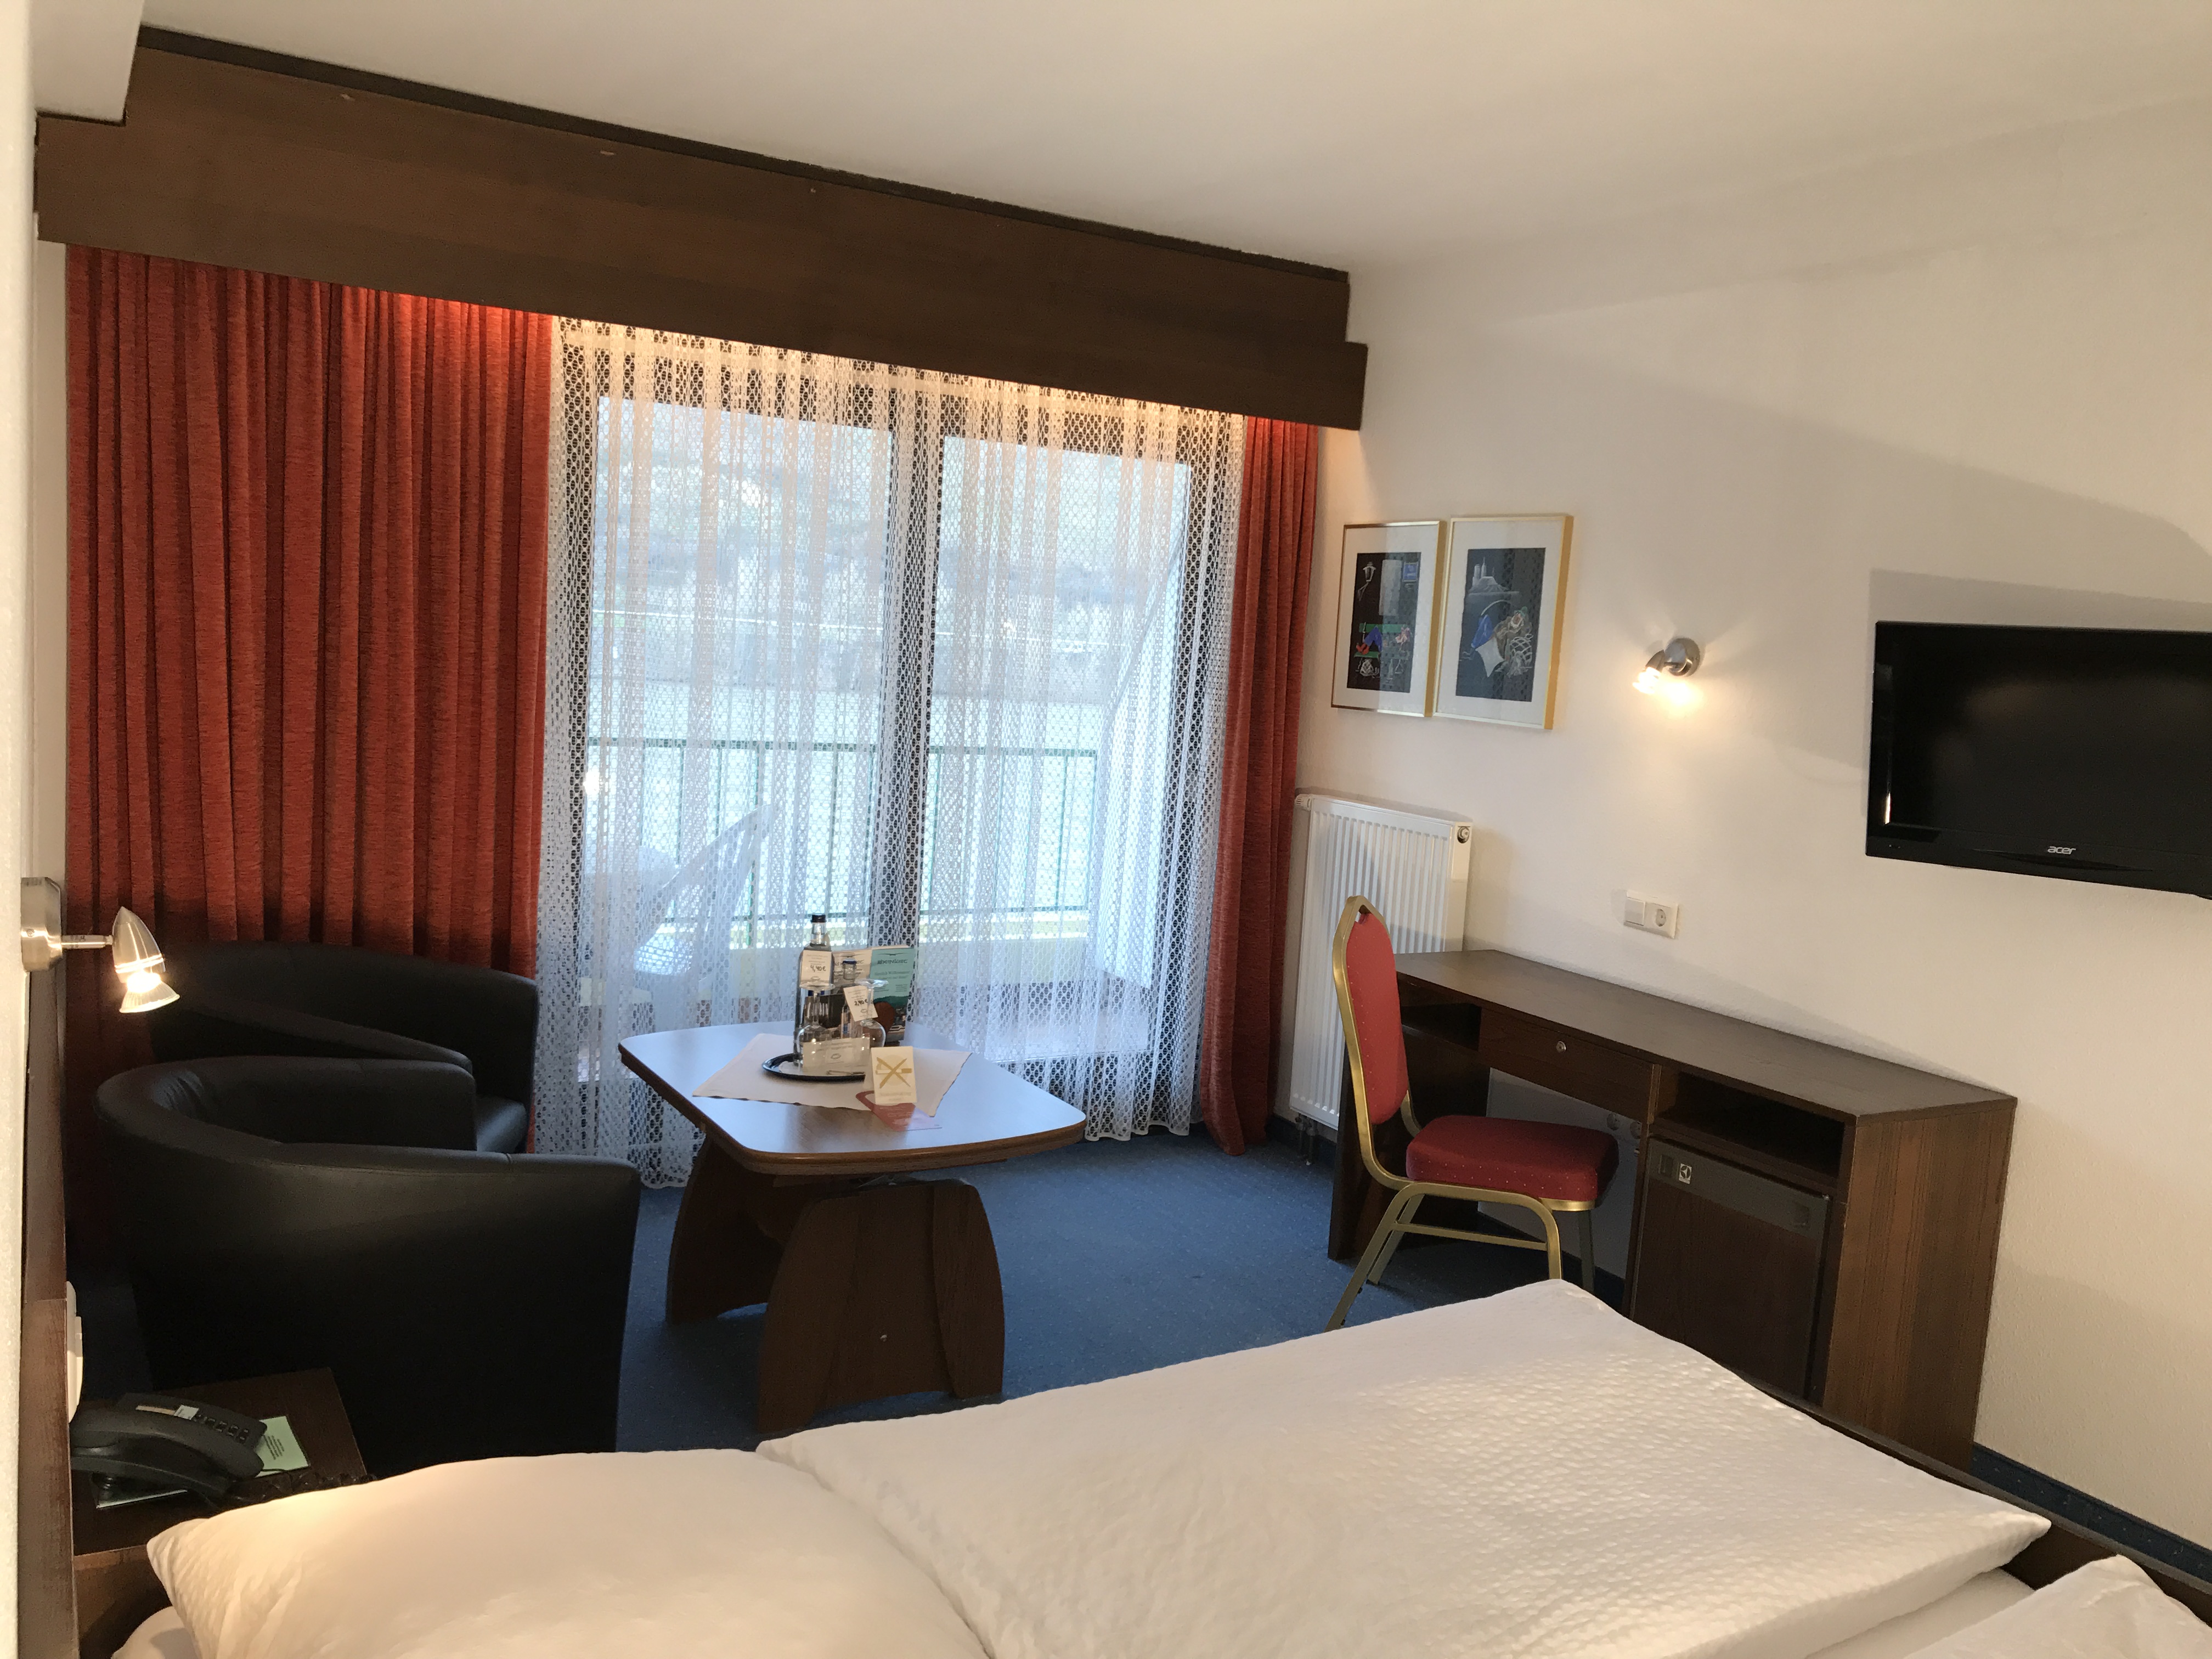 Doppelzimmer im Hotel Rheinlust, Boppard
